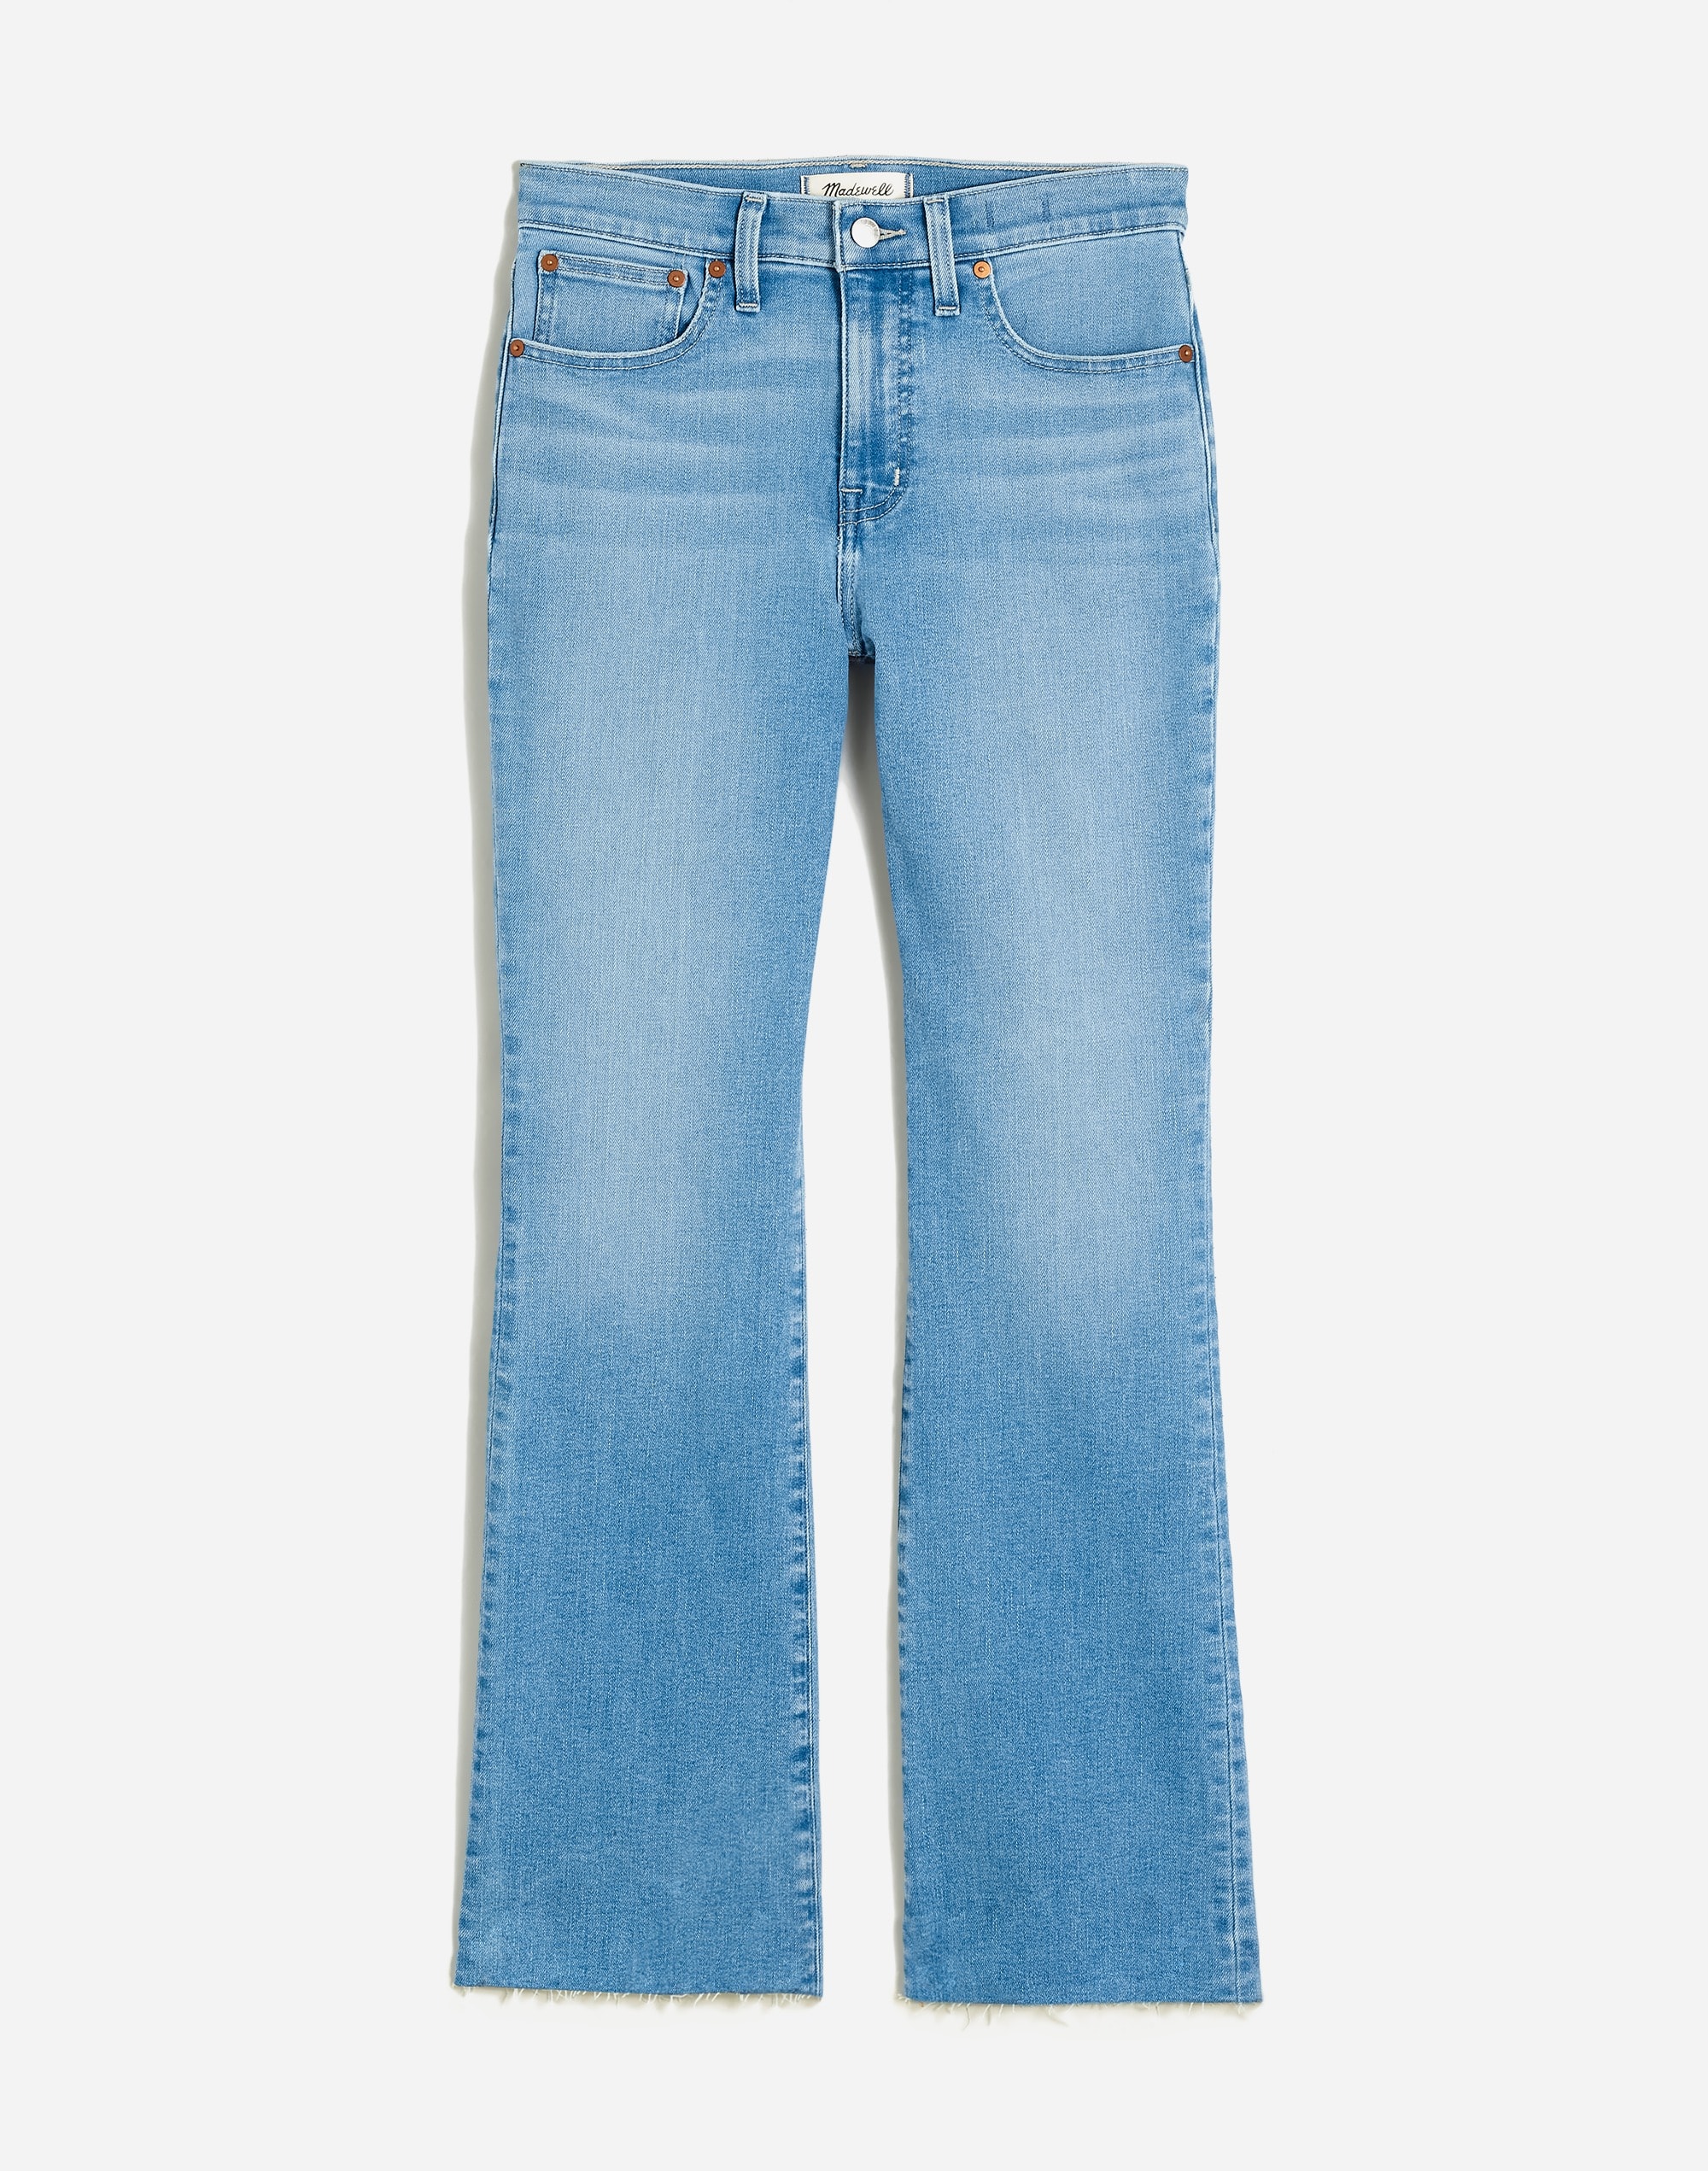 Plus Kick Out Crop Jeans Corley Wash: Raw-Hem Edition